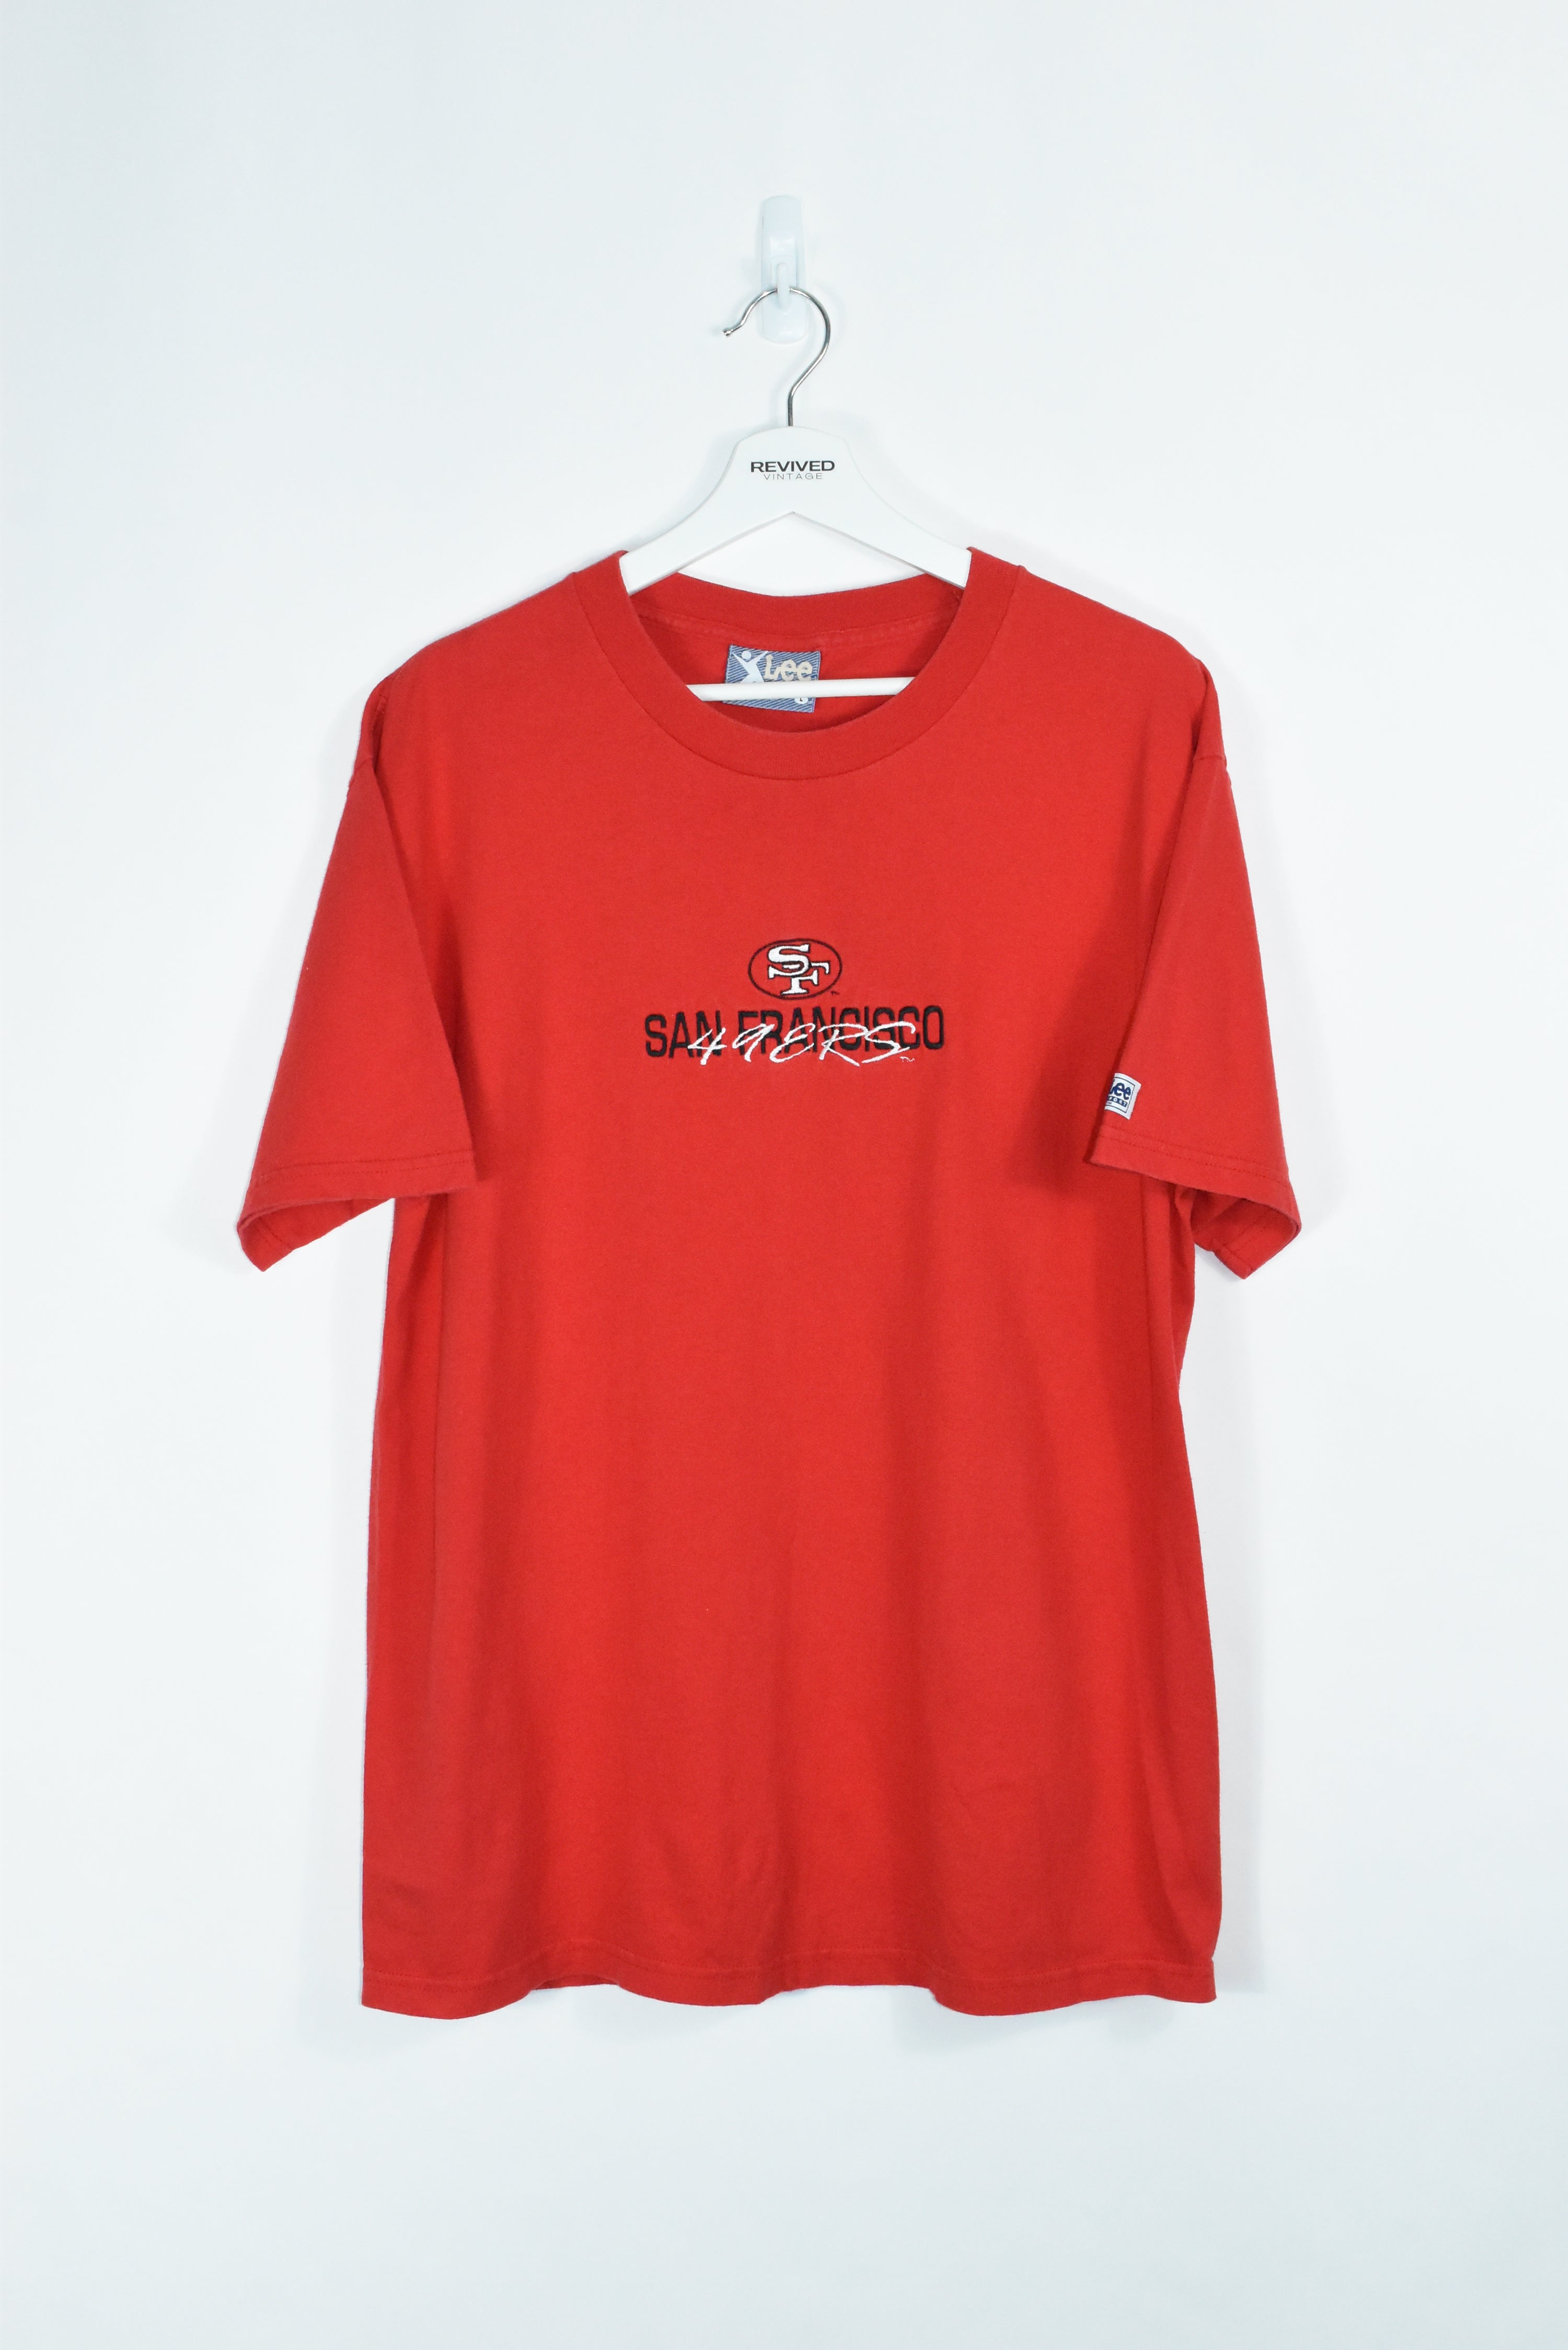 Vintage Lee Sport San Fran Embroidery T Shirt Xlarge